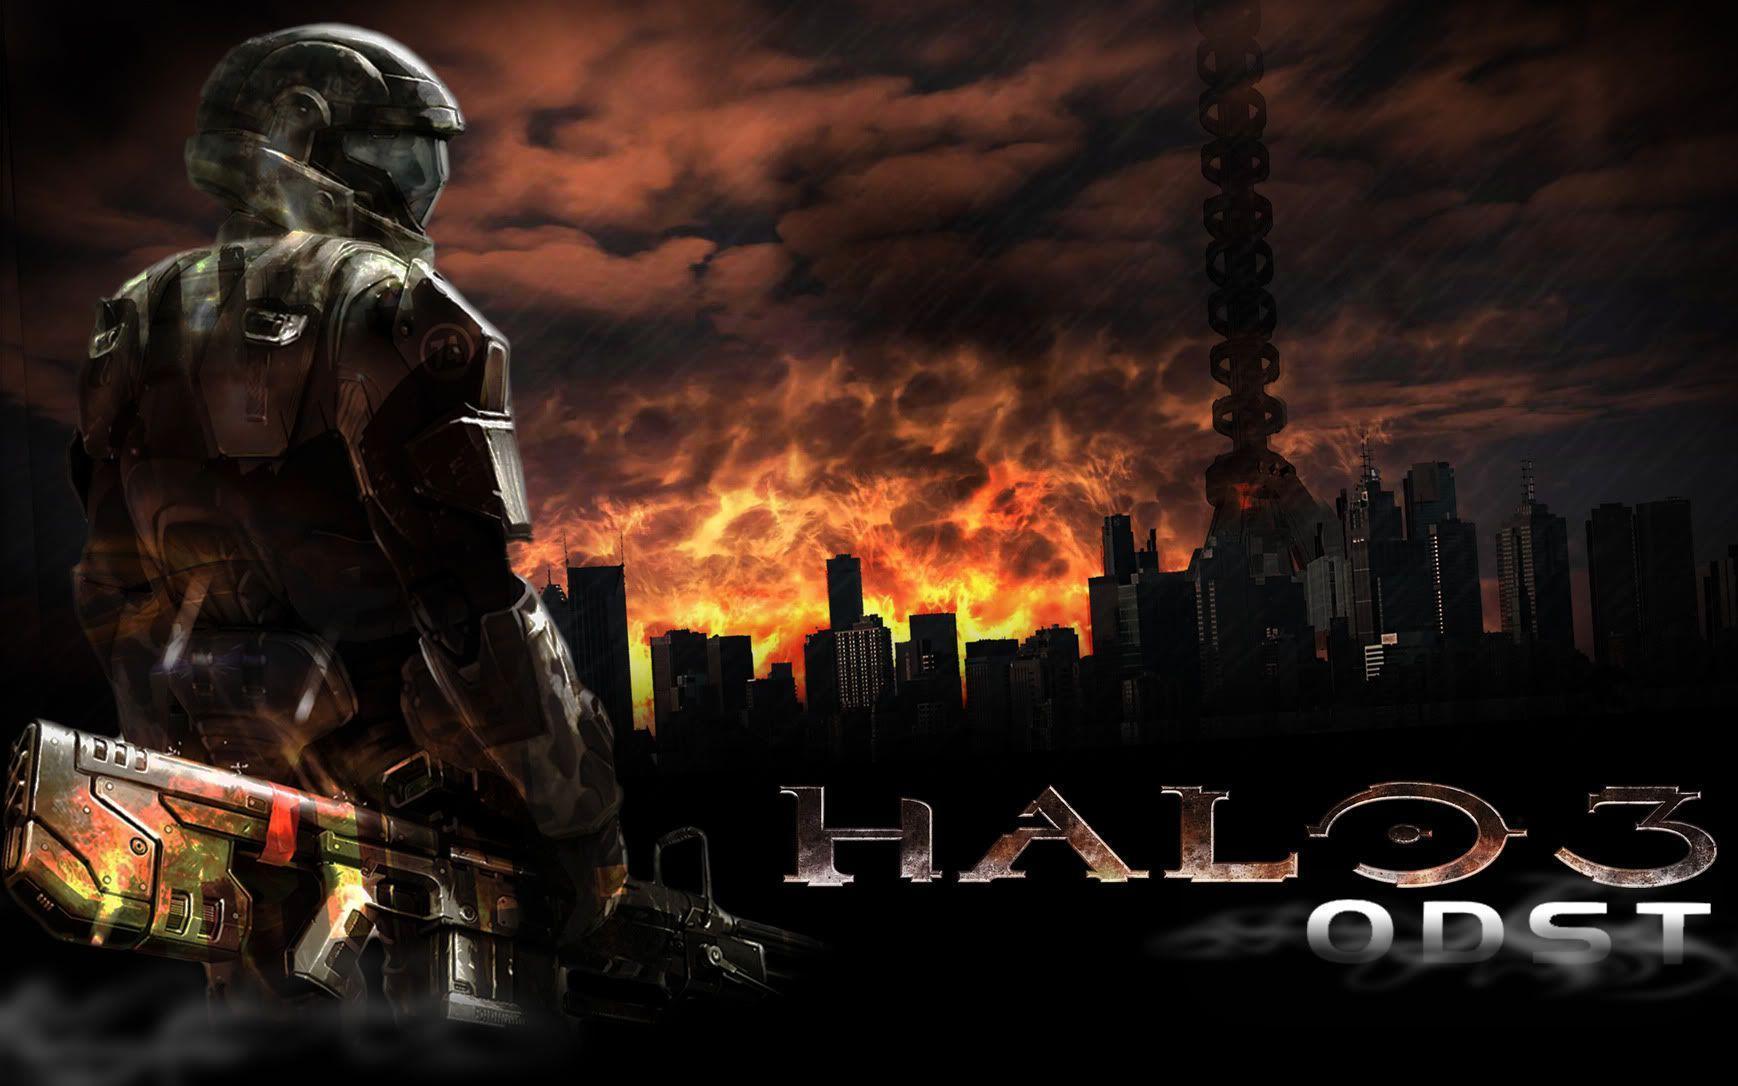 Halo 3 Odst Backgrounds